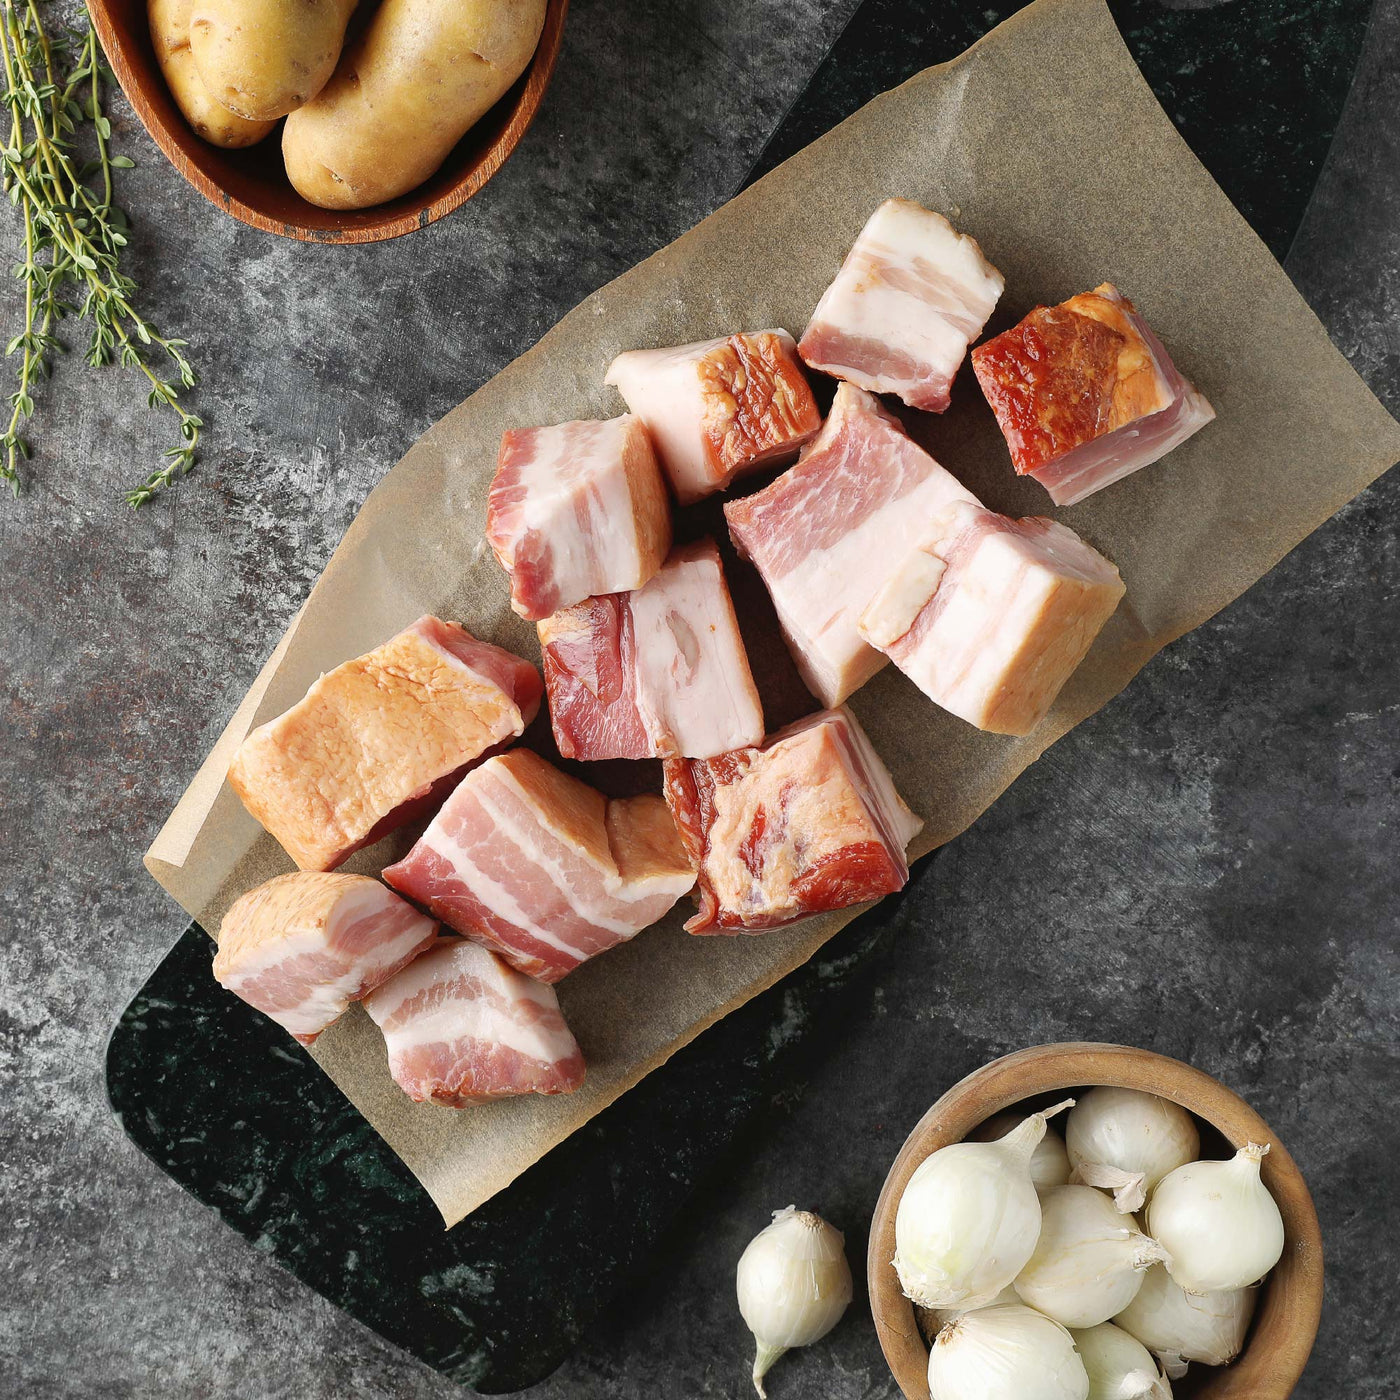 Pork - Bacon - Ends and Tips